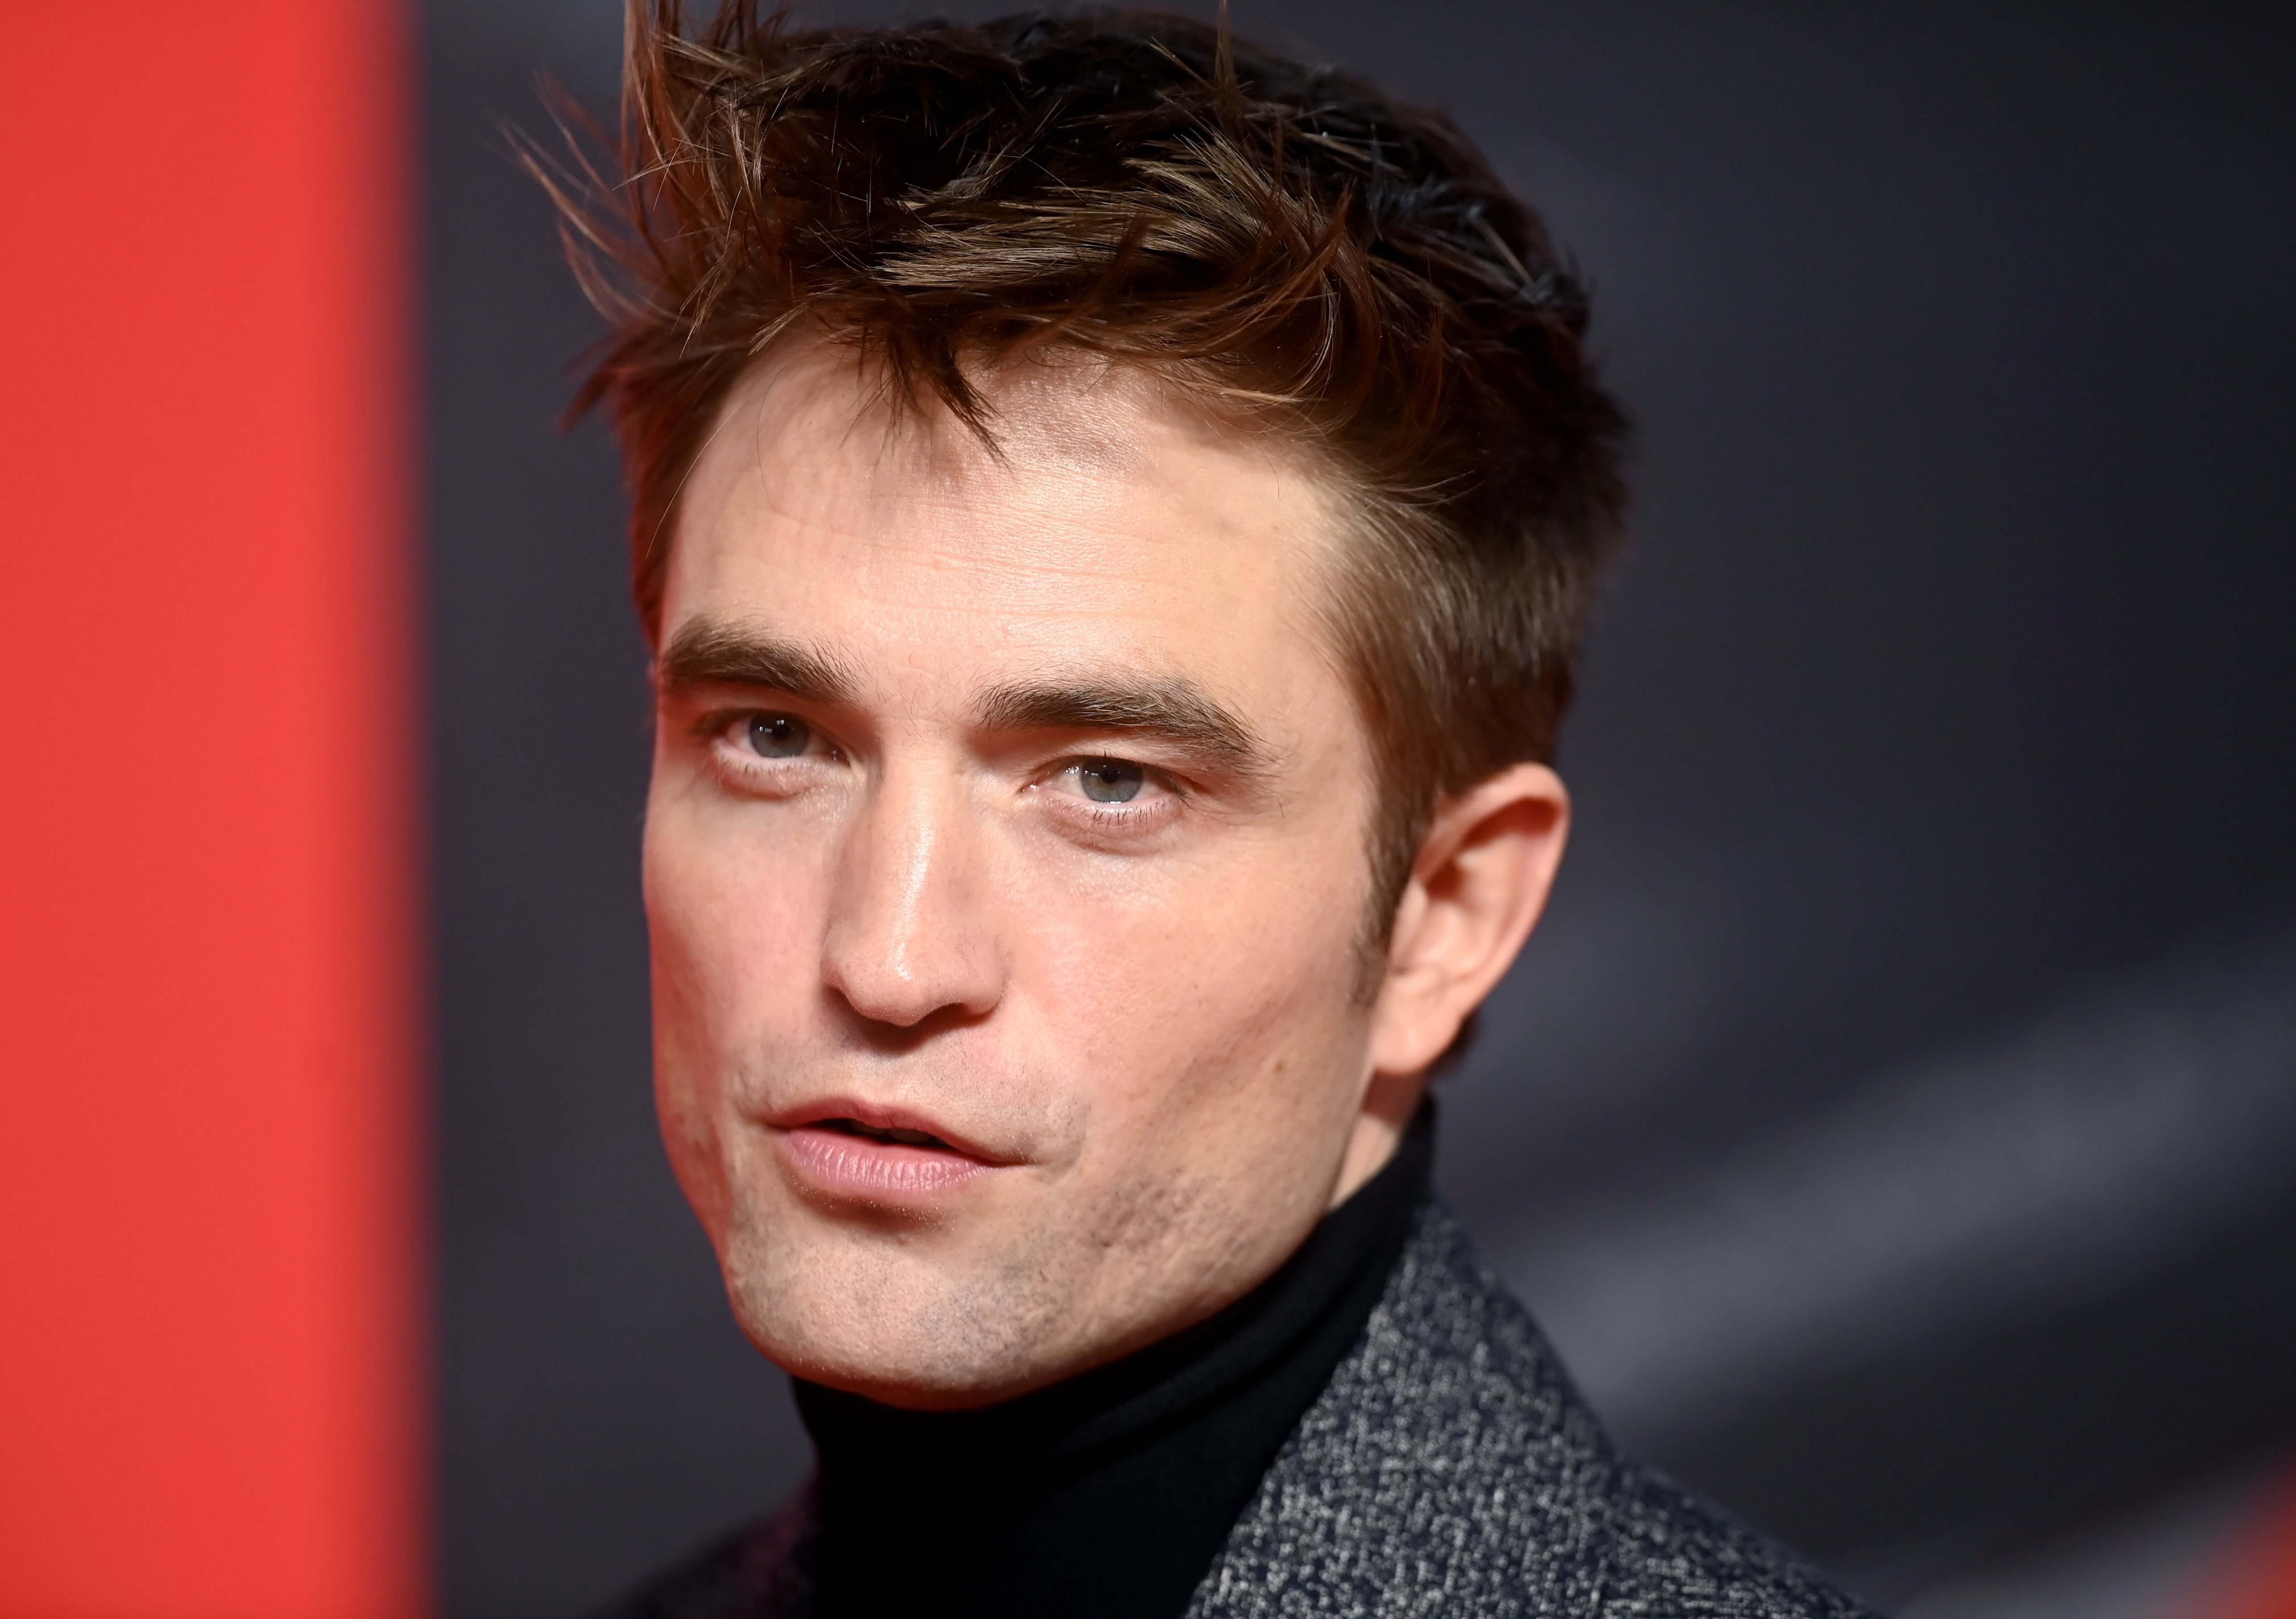 'The Batman' star Robert Pattinson wears a gray coat over a black turtleneck.